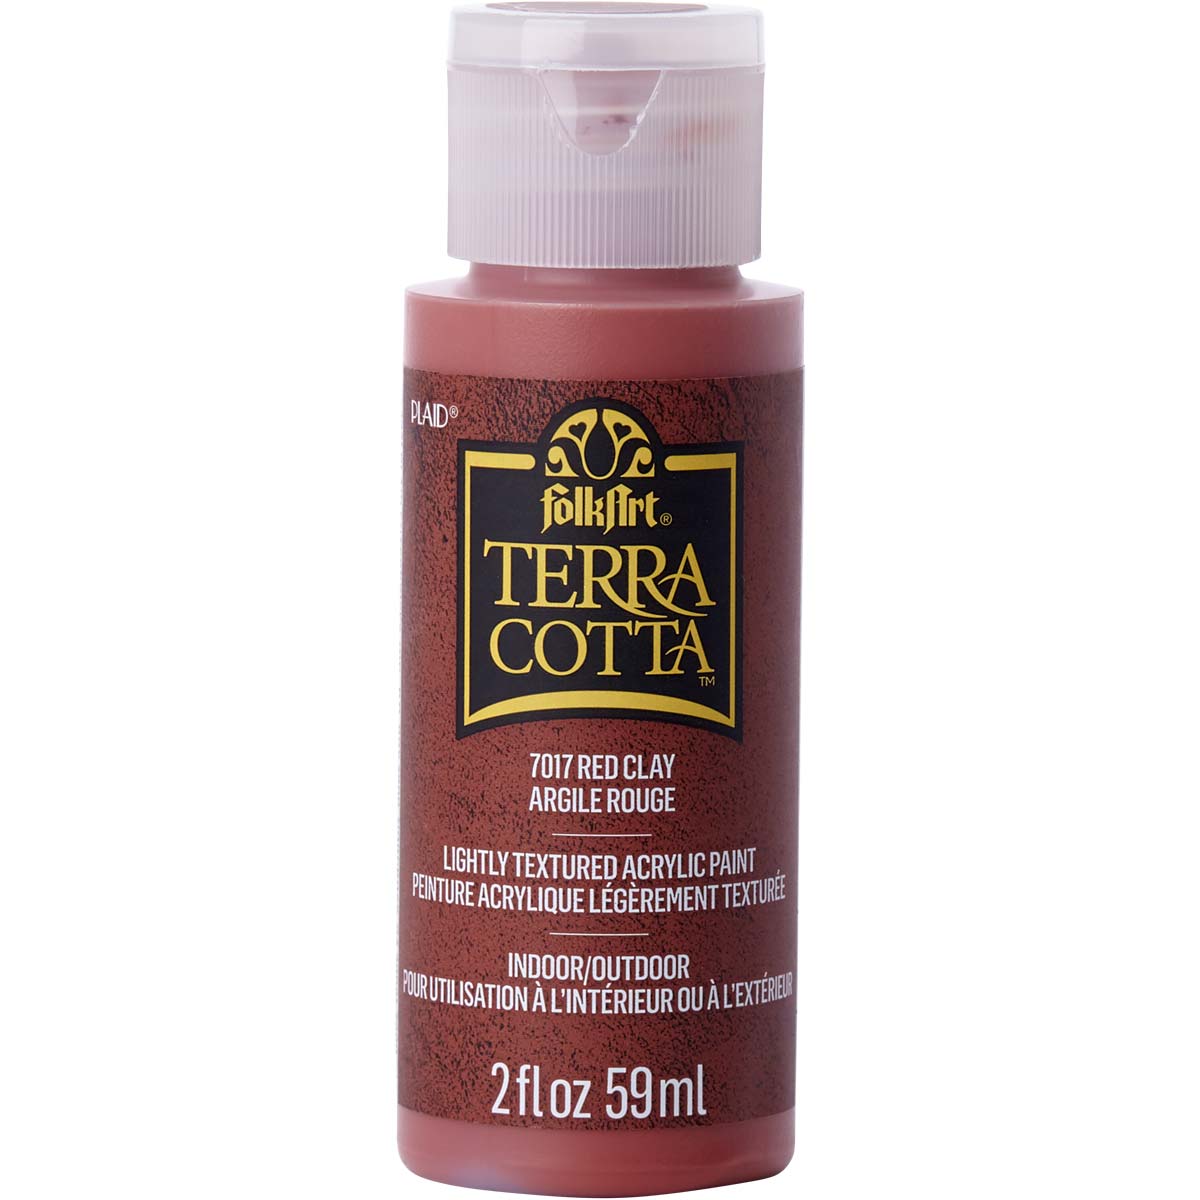 FolkArt ® Terra Cotta™ Acrylic Paint - Red Clay, 2 oz. - 7017